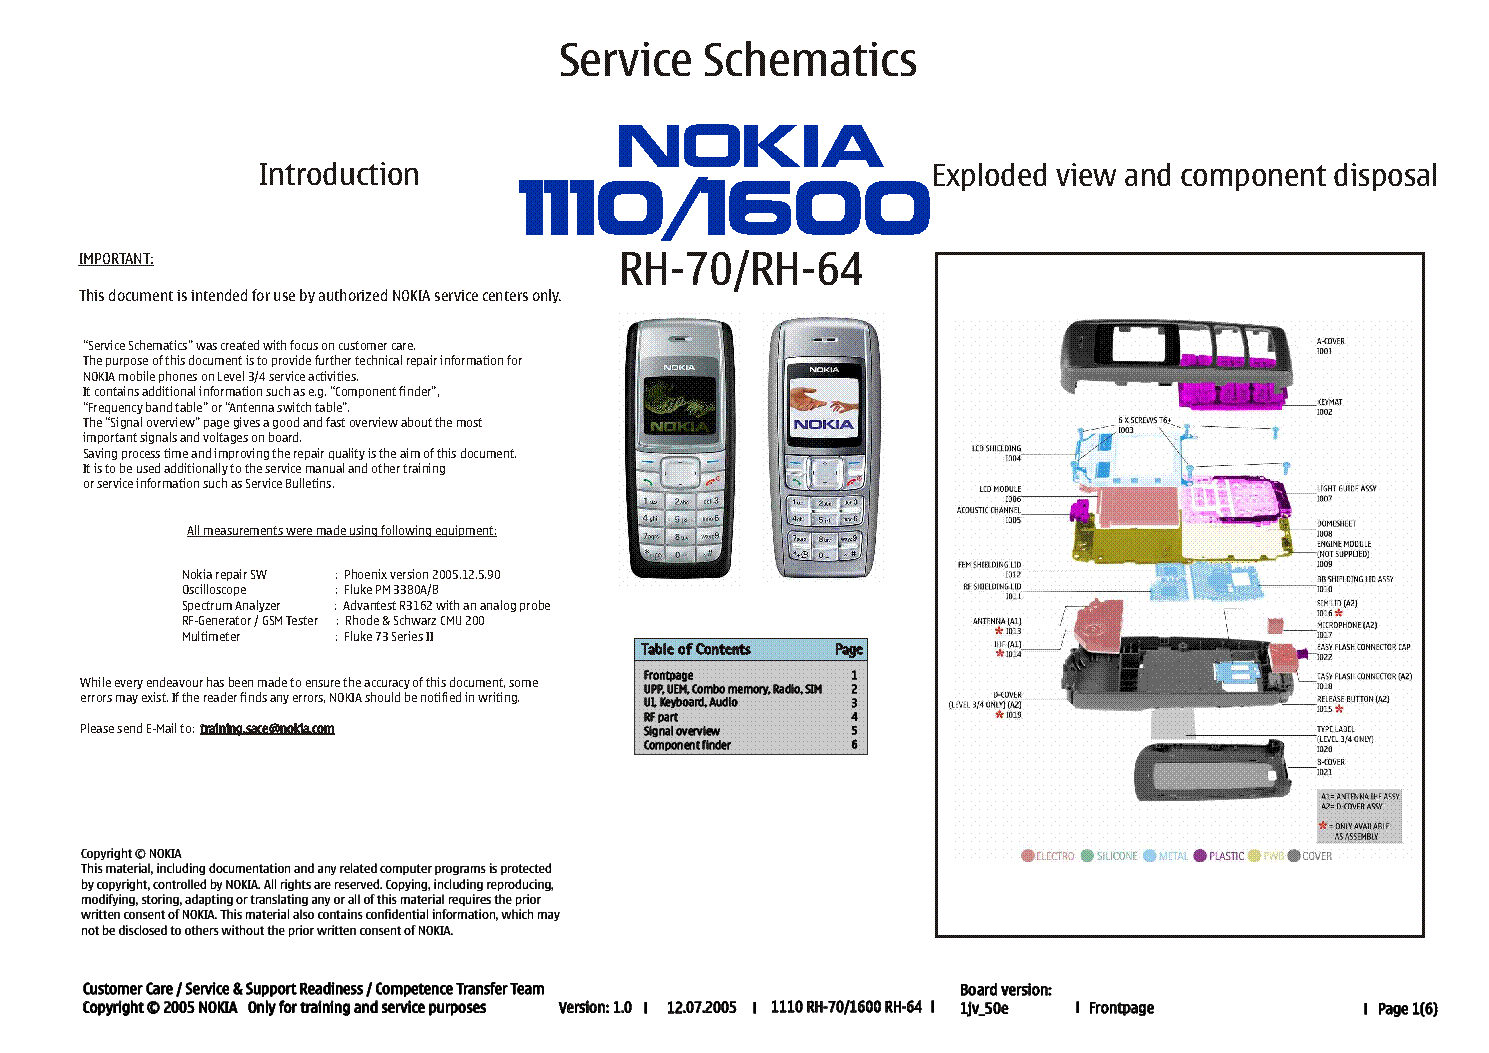 NOKIA 1110-1600 SCH service manual (1st page)